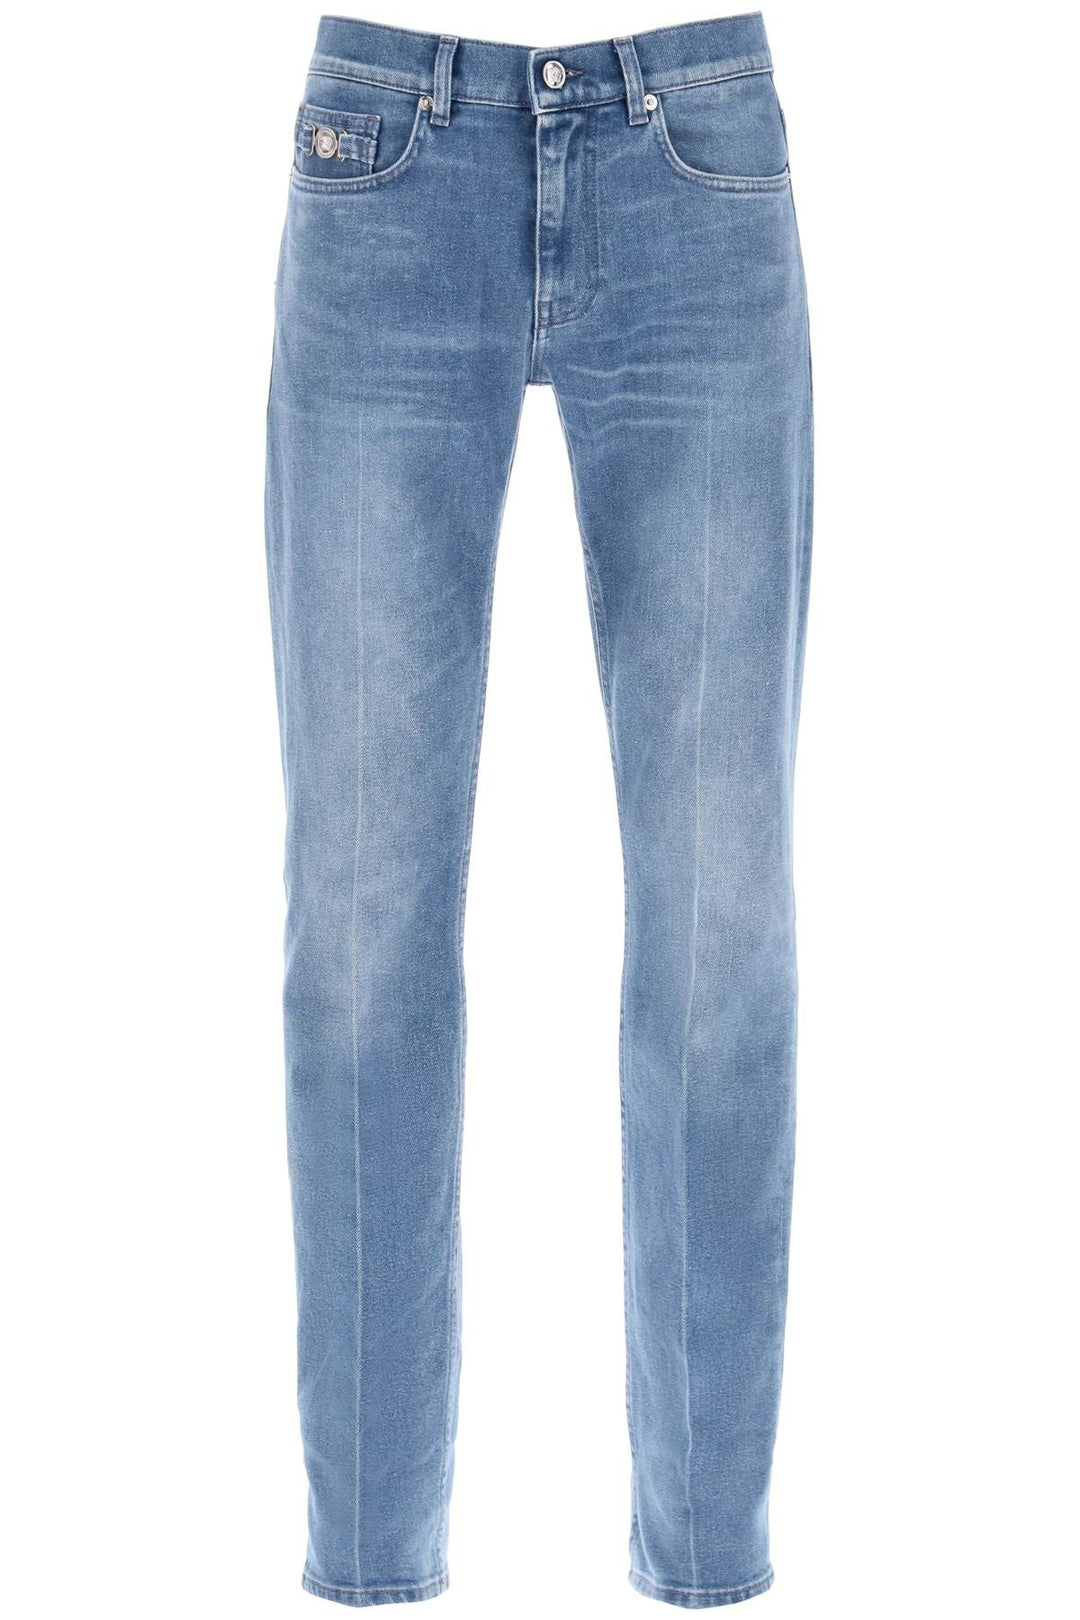 Versace Stretch Denim Slim Fit Jeans   Celeste